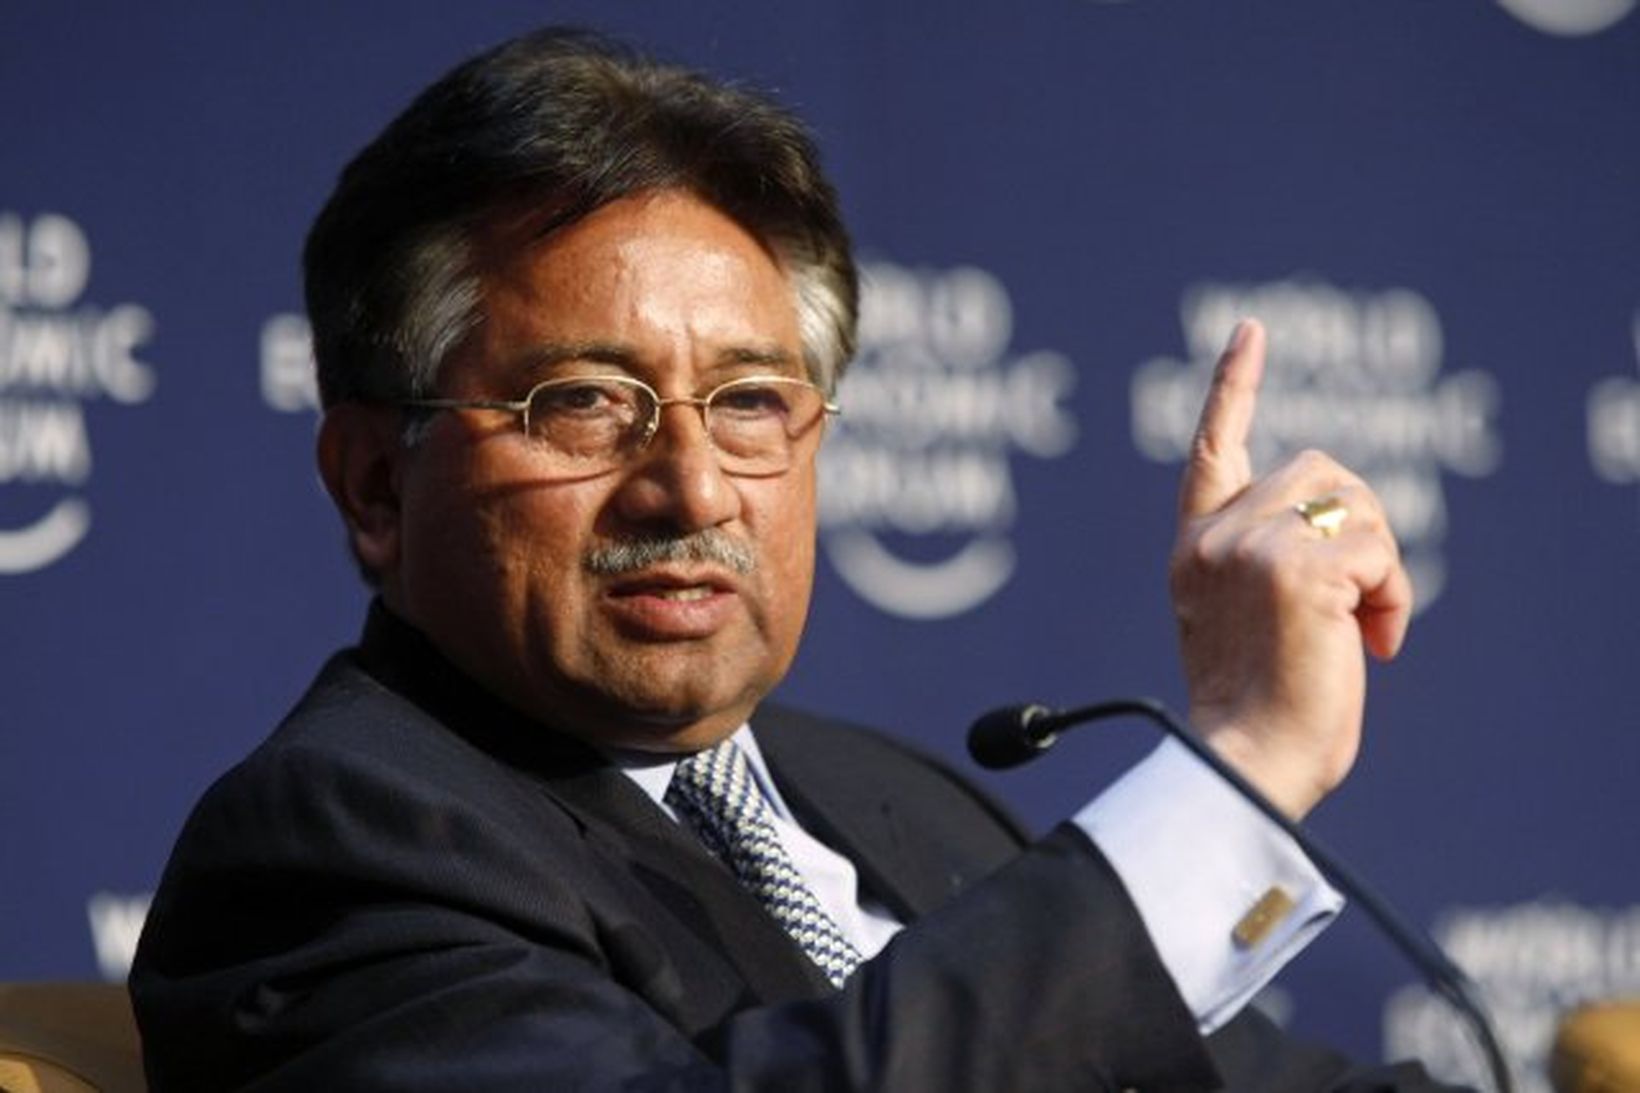 Pervez Musharraf forseti Pakistans